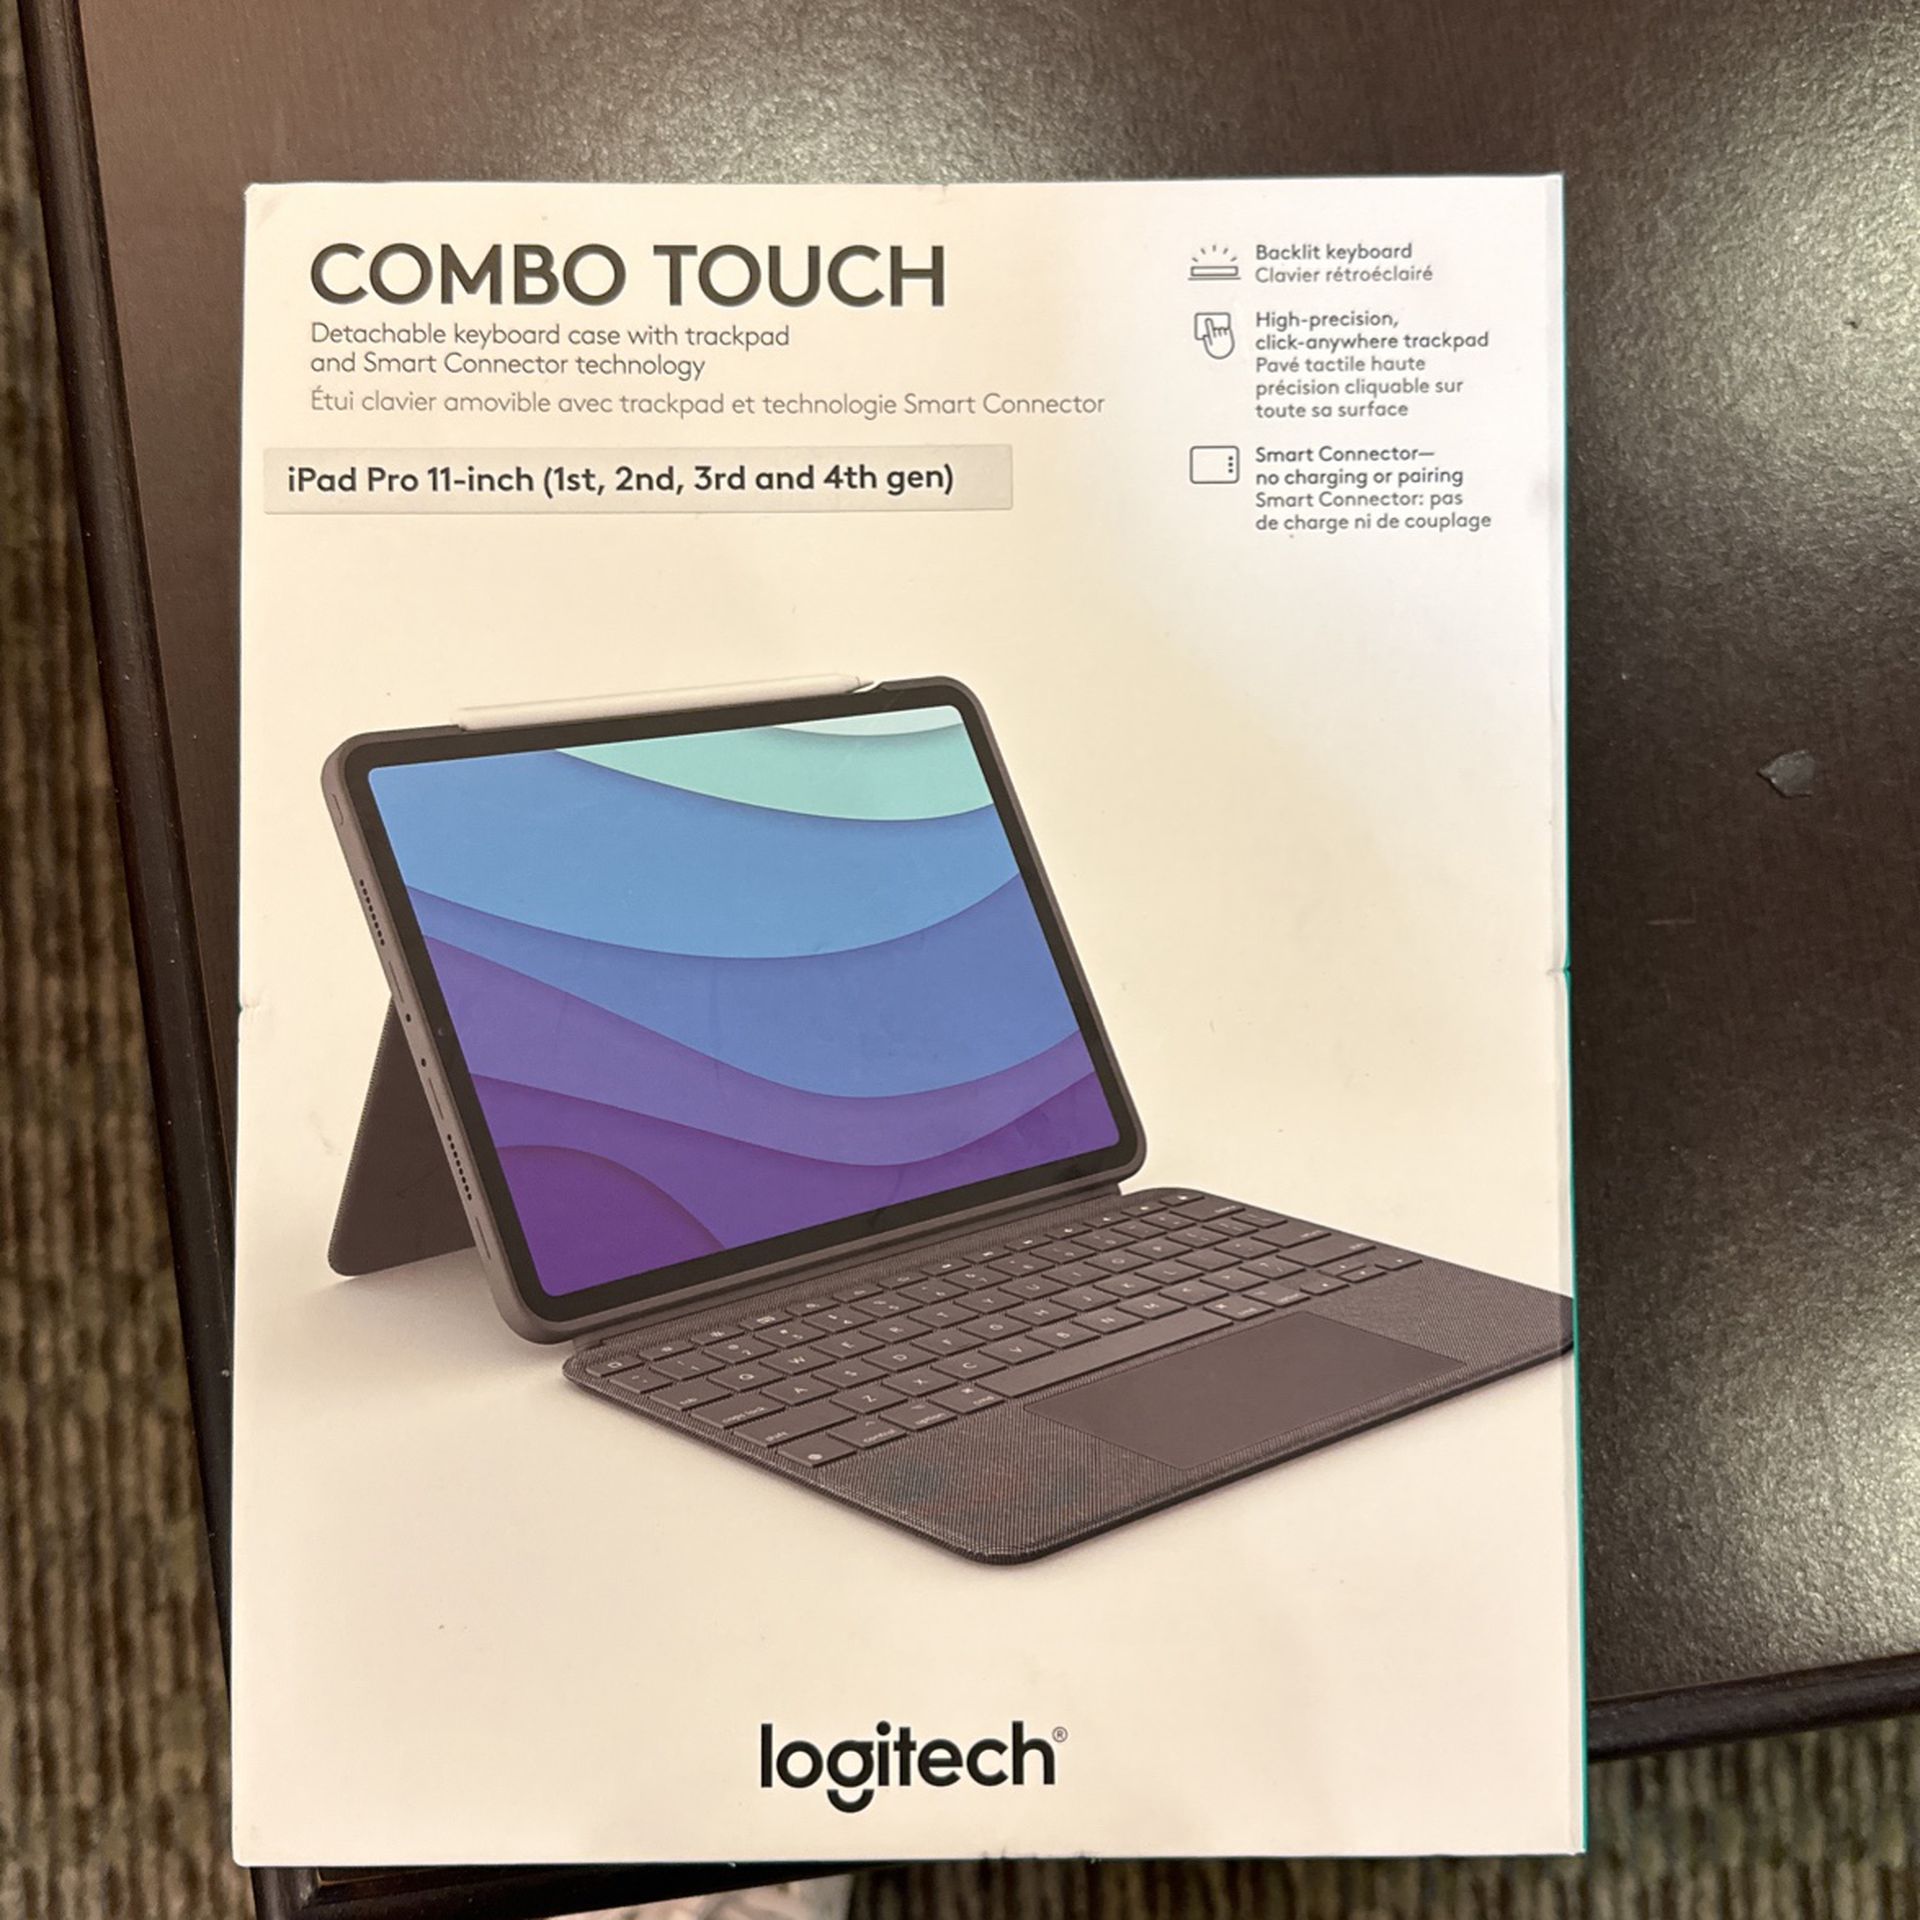 Logitech Combo Touch